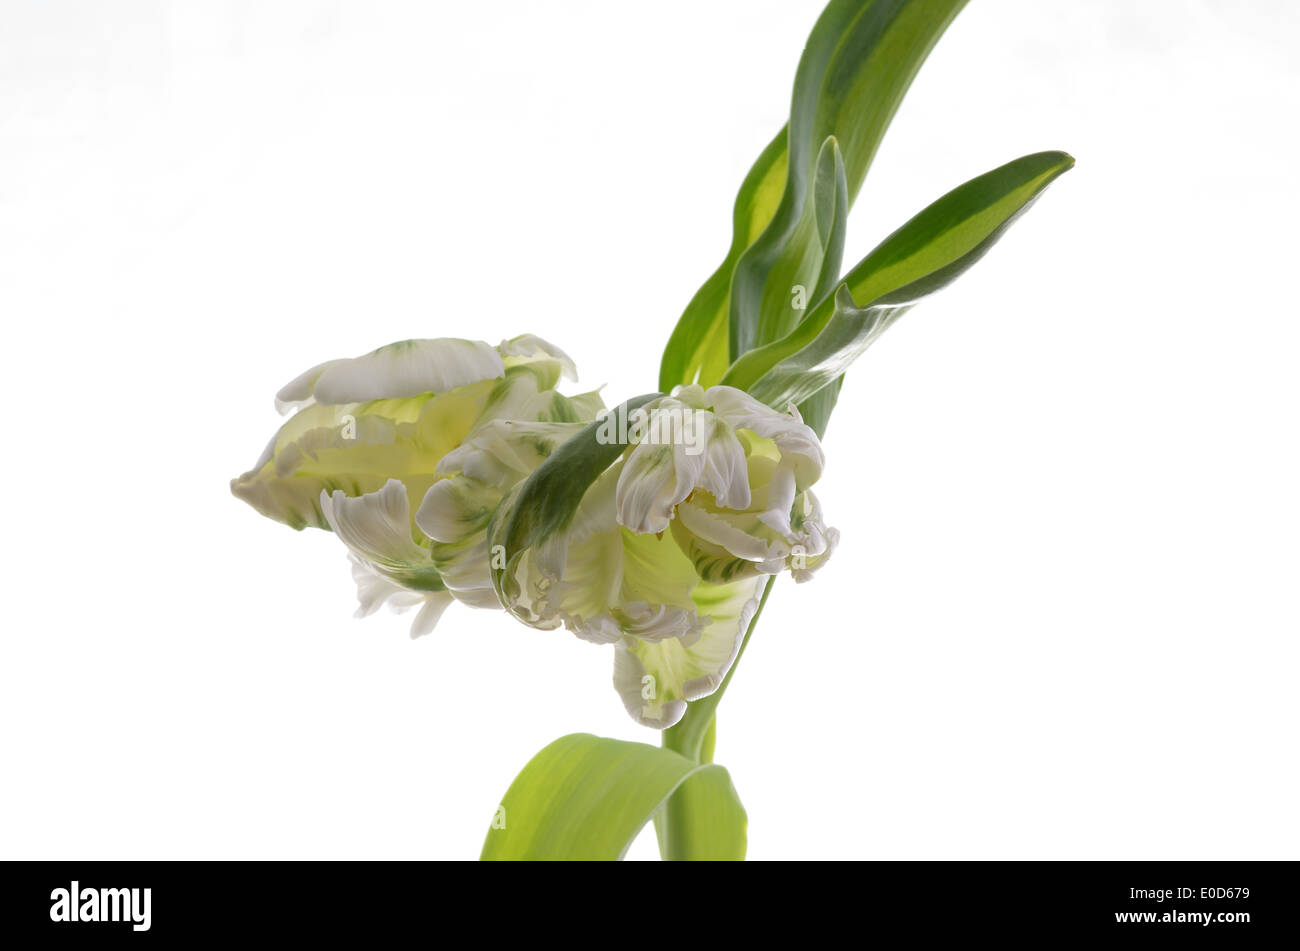 Photo of tulip on a white background Stock Photo